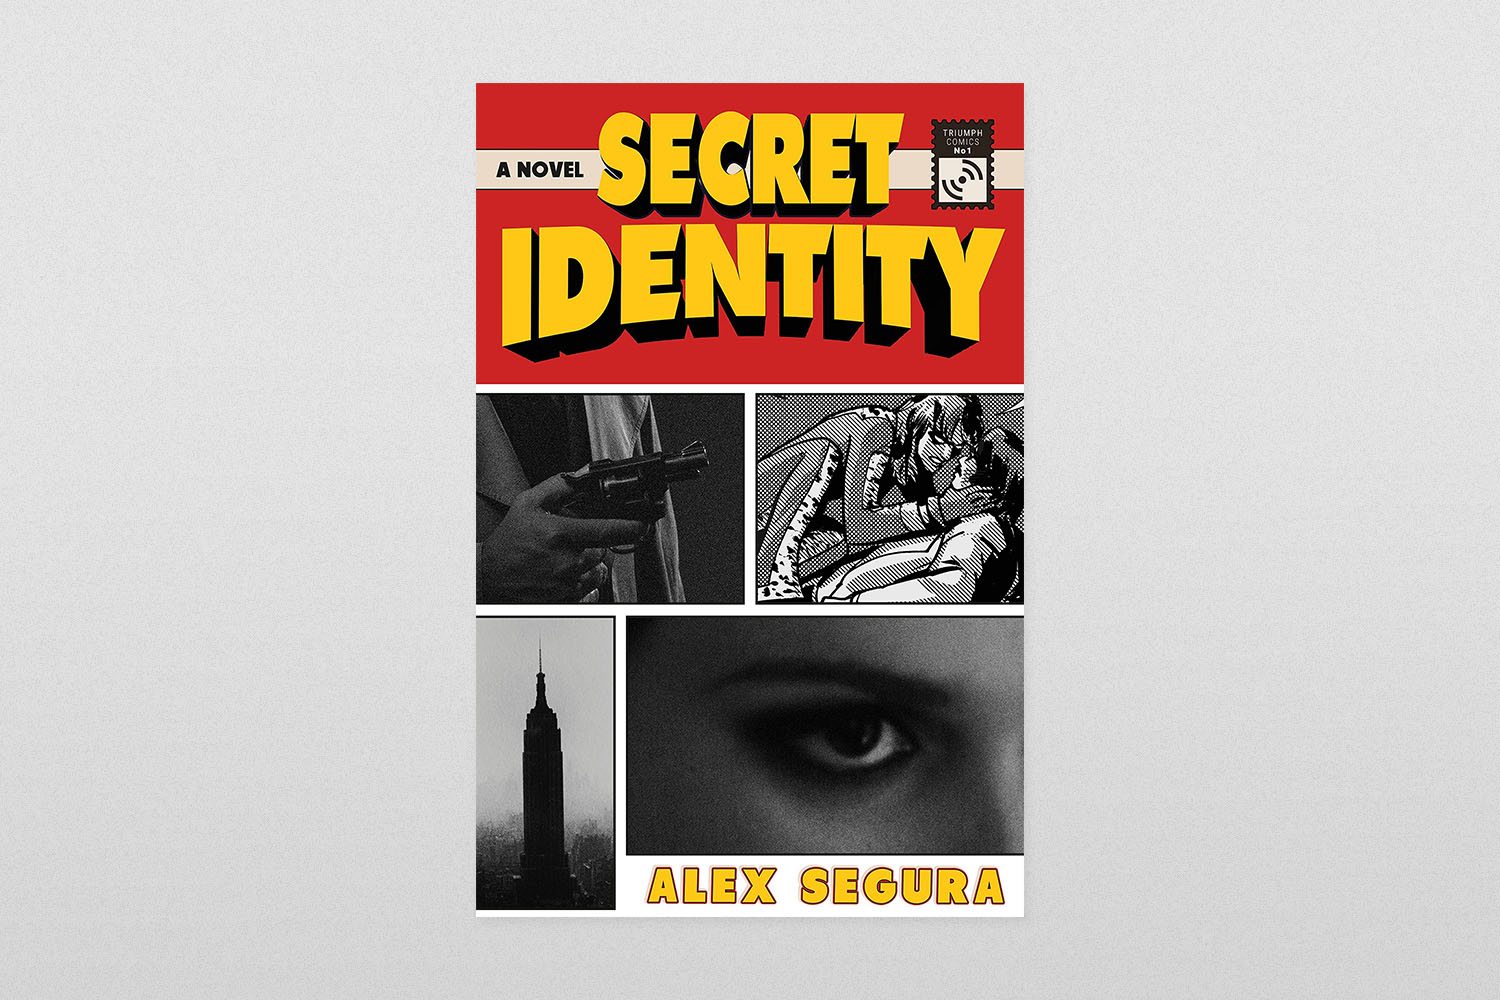 "Secret Identity"